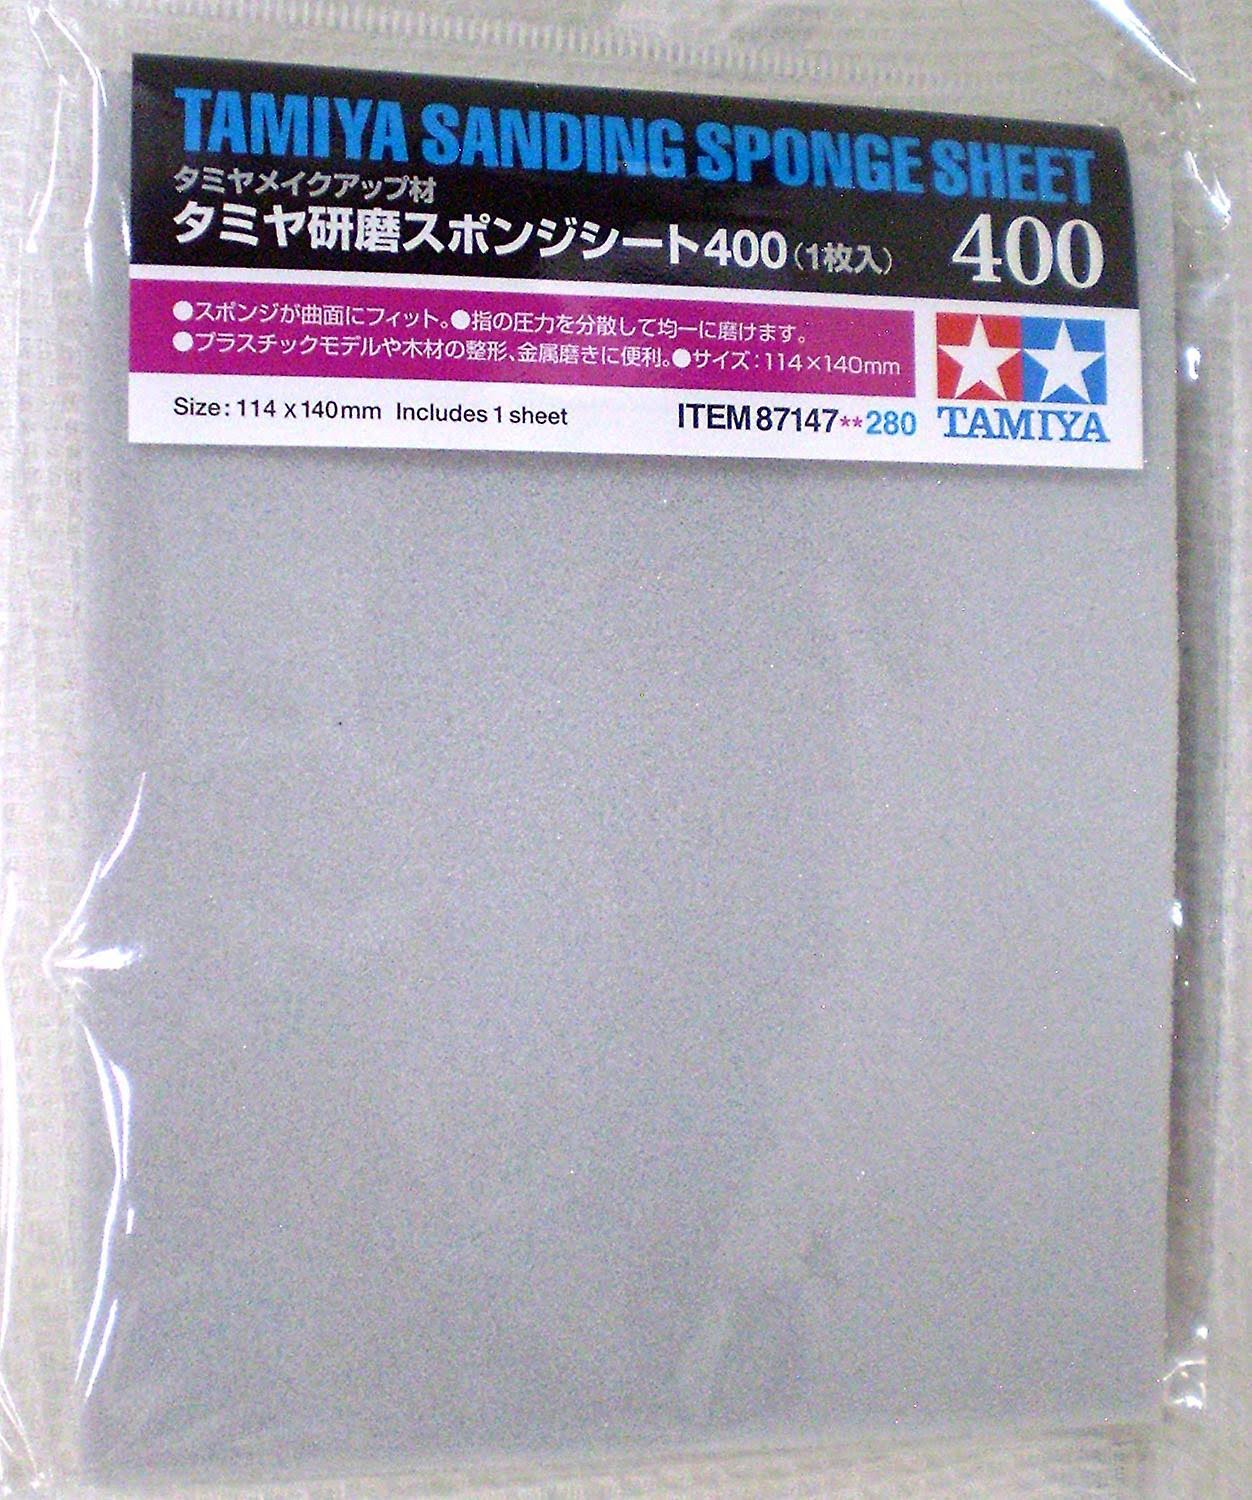 Tamiya Sanding Sponge Sheet - Grade 400, 114x140mm